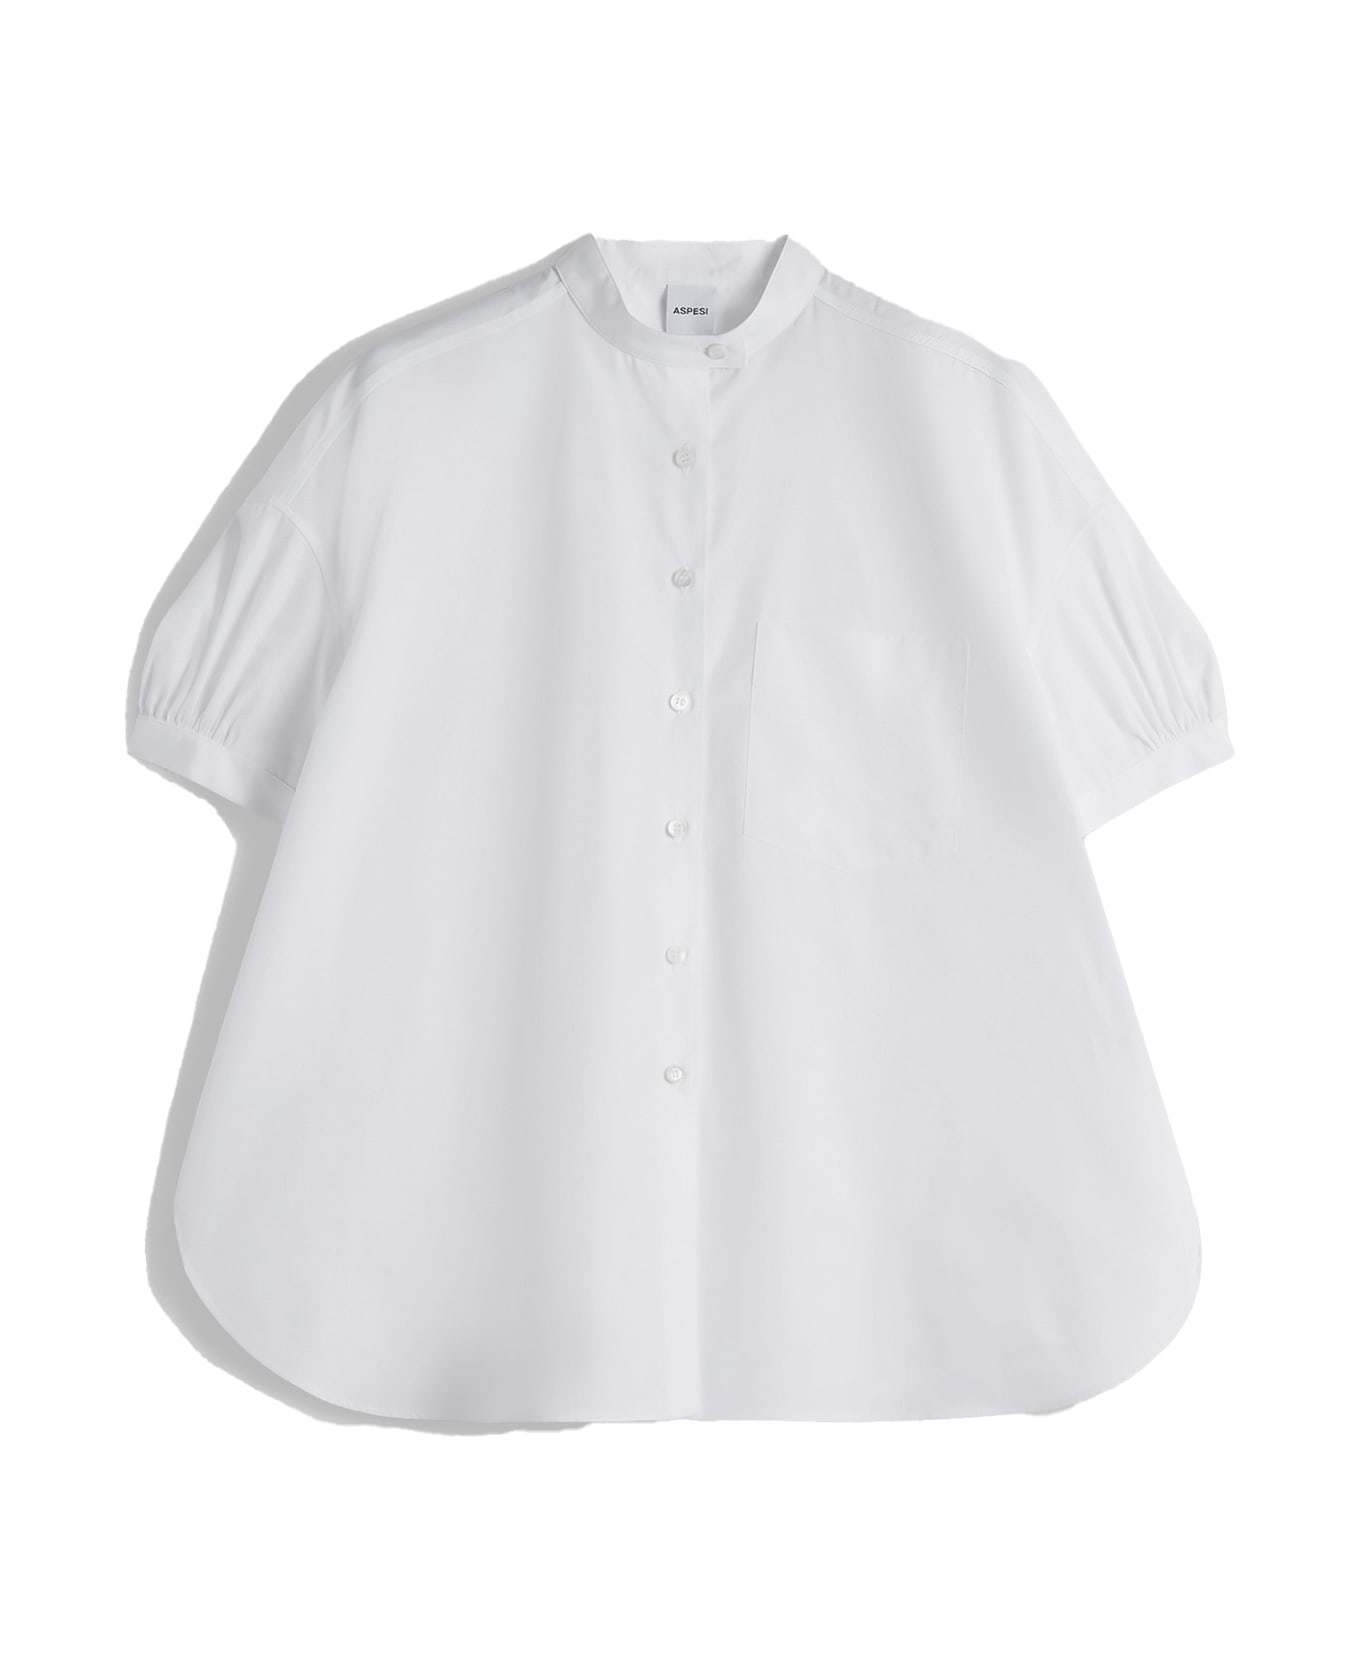 Aspesi White Shirt With Short Sleeves - BIANCO シャツ